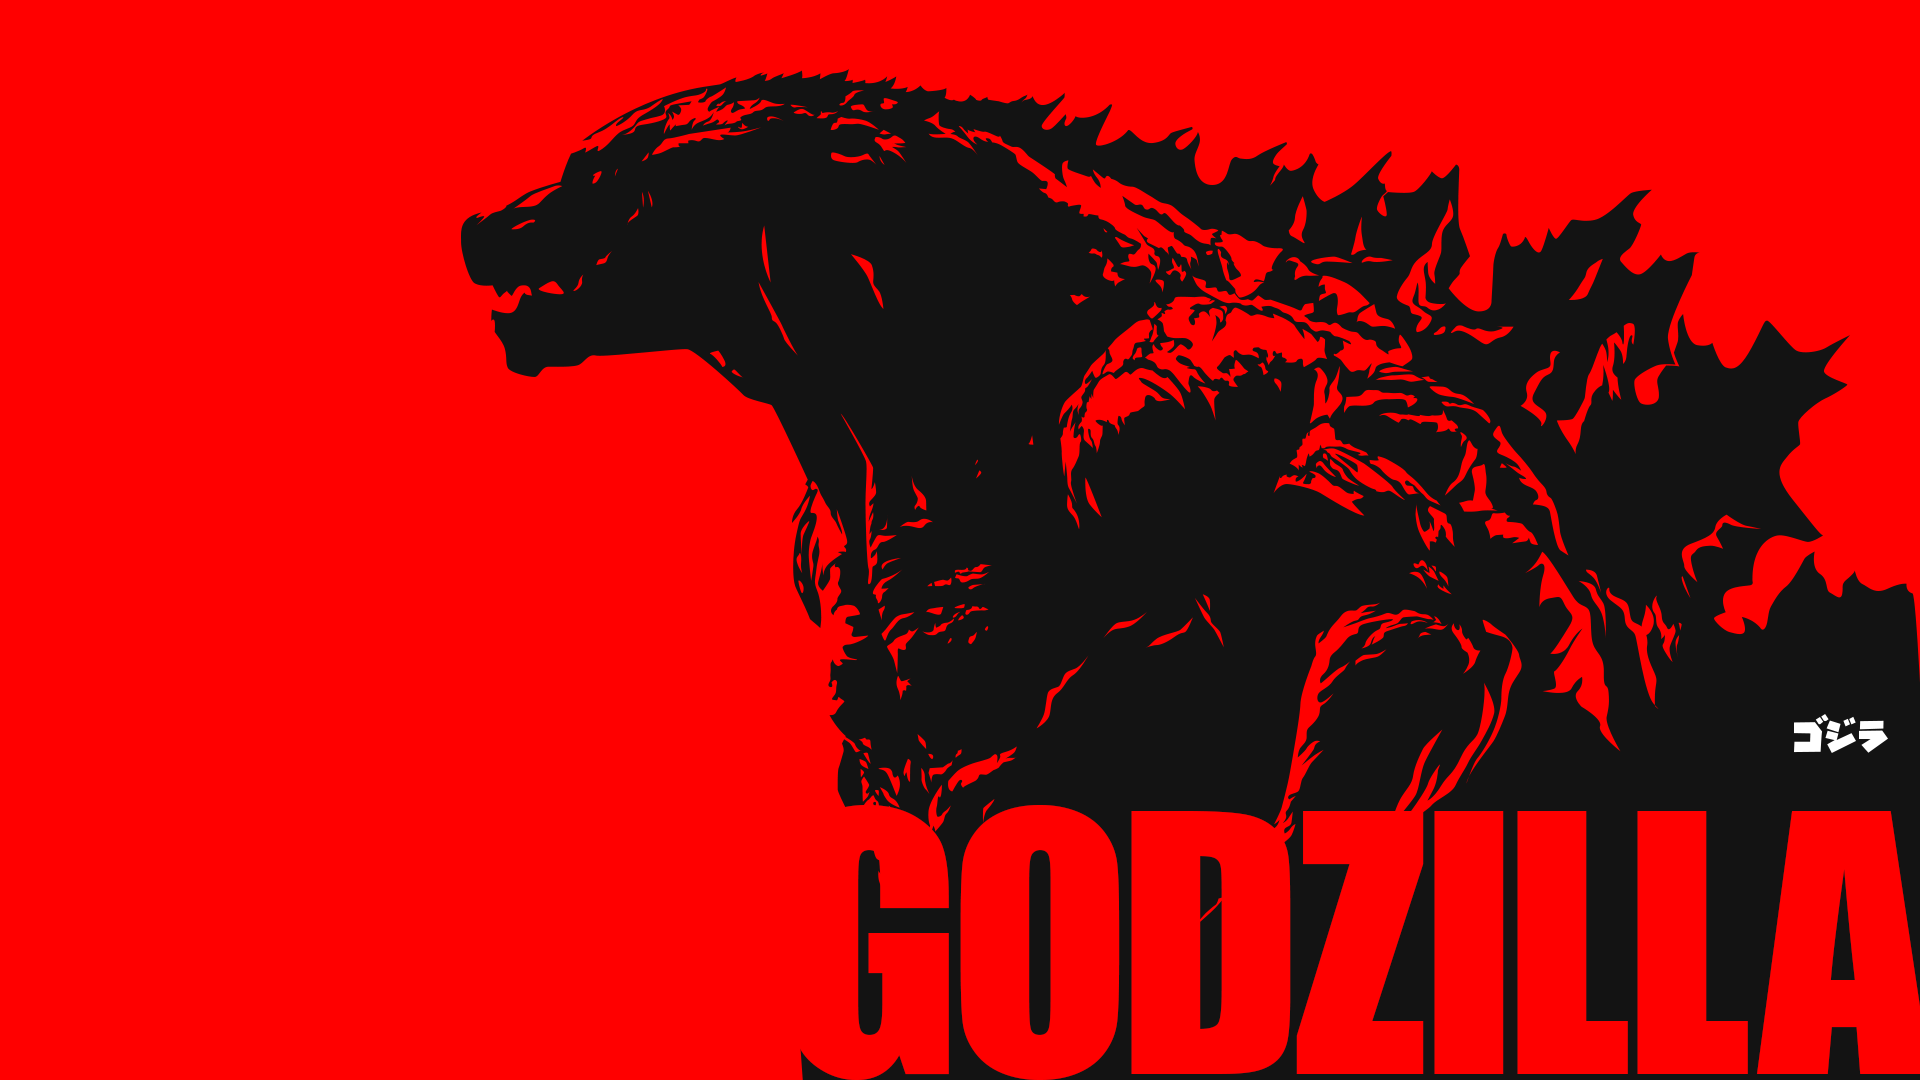 General 1920x1080 Godzilla artwork movies red simple background digital art